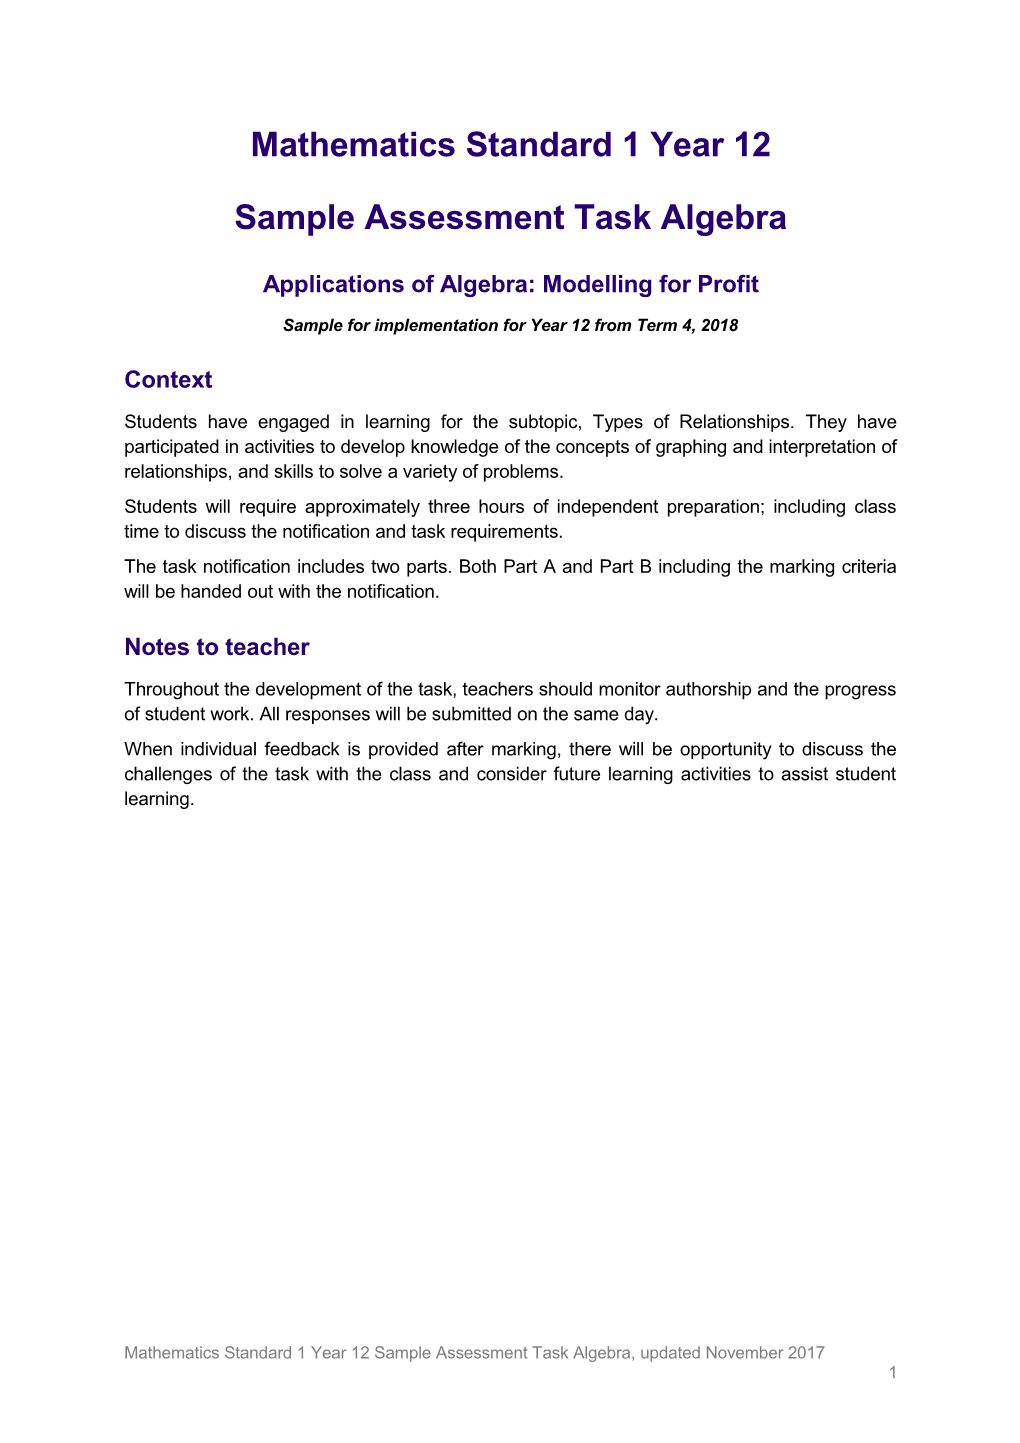 Mathematics Standard 1 Year 12 Sample Assessment Task Algebra